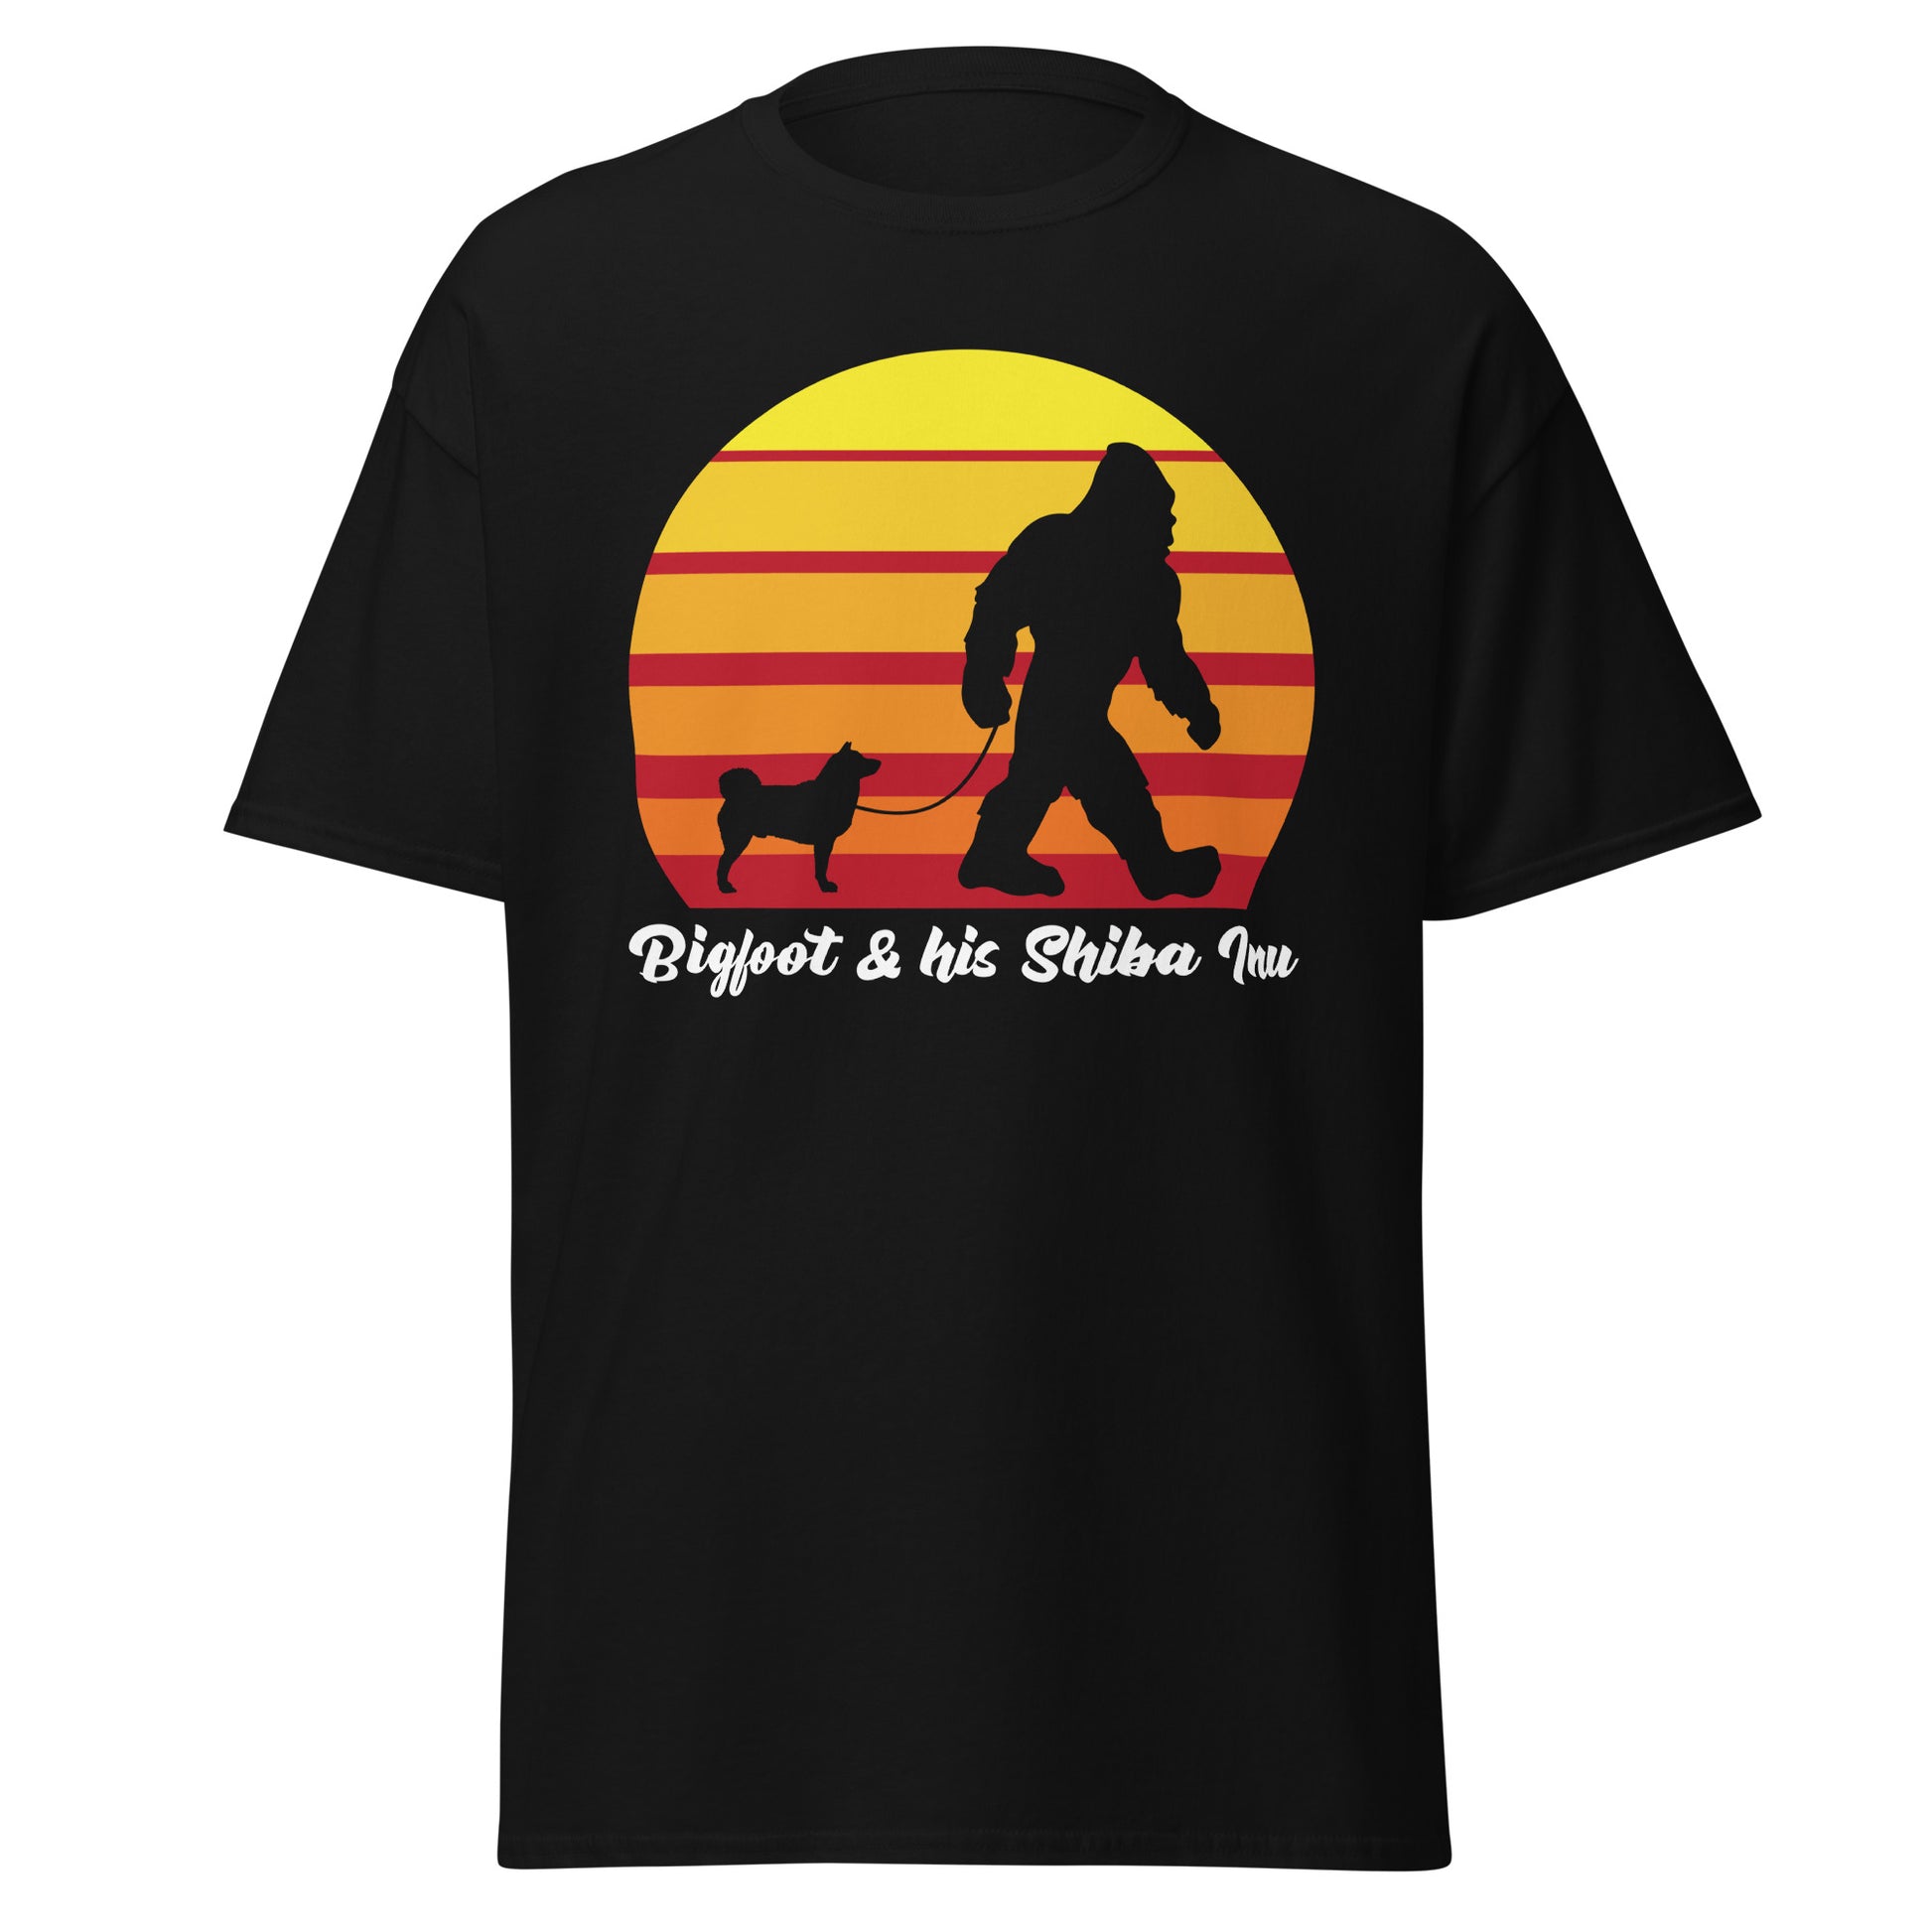 Bigfoot and his Shiba Inu men’s black t-shirt by Dog Artistry.